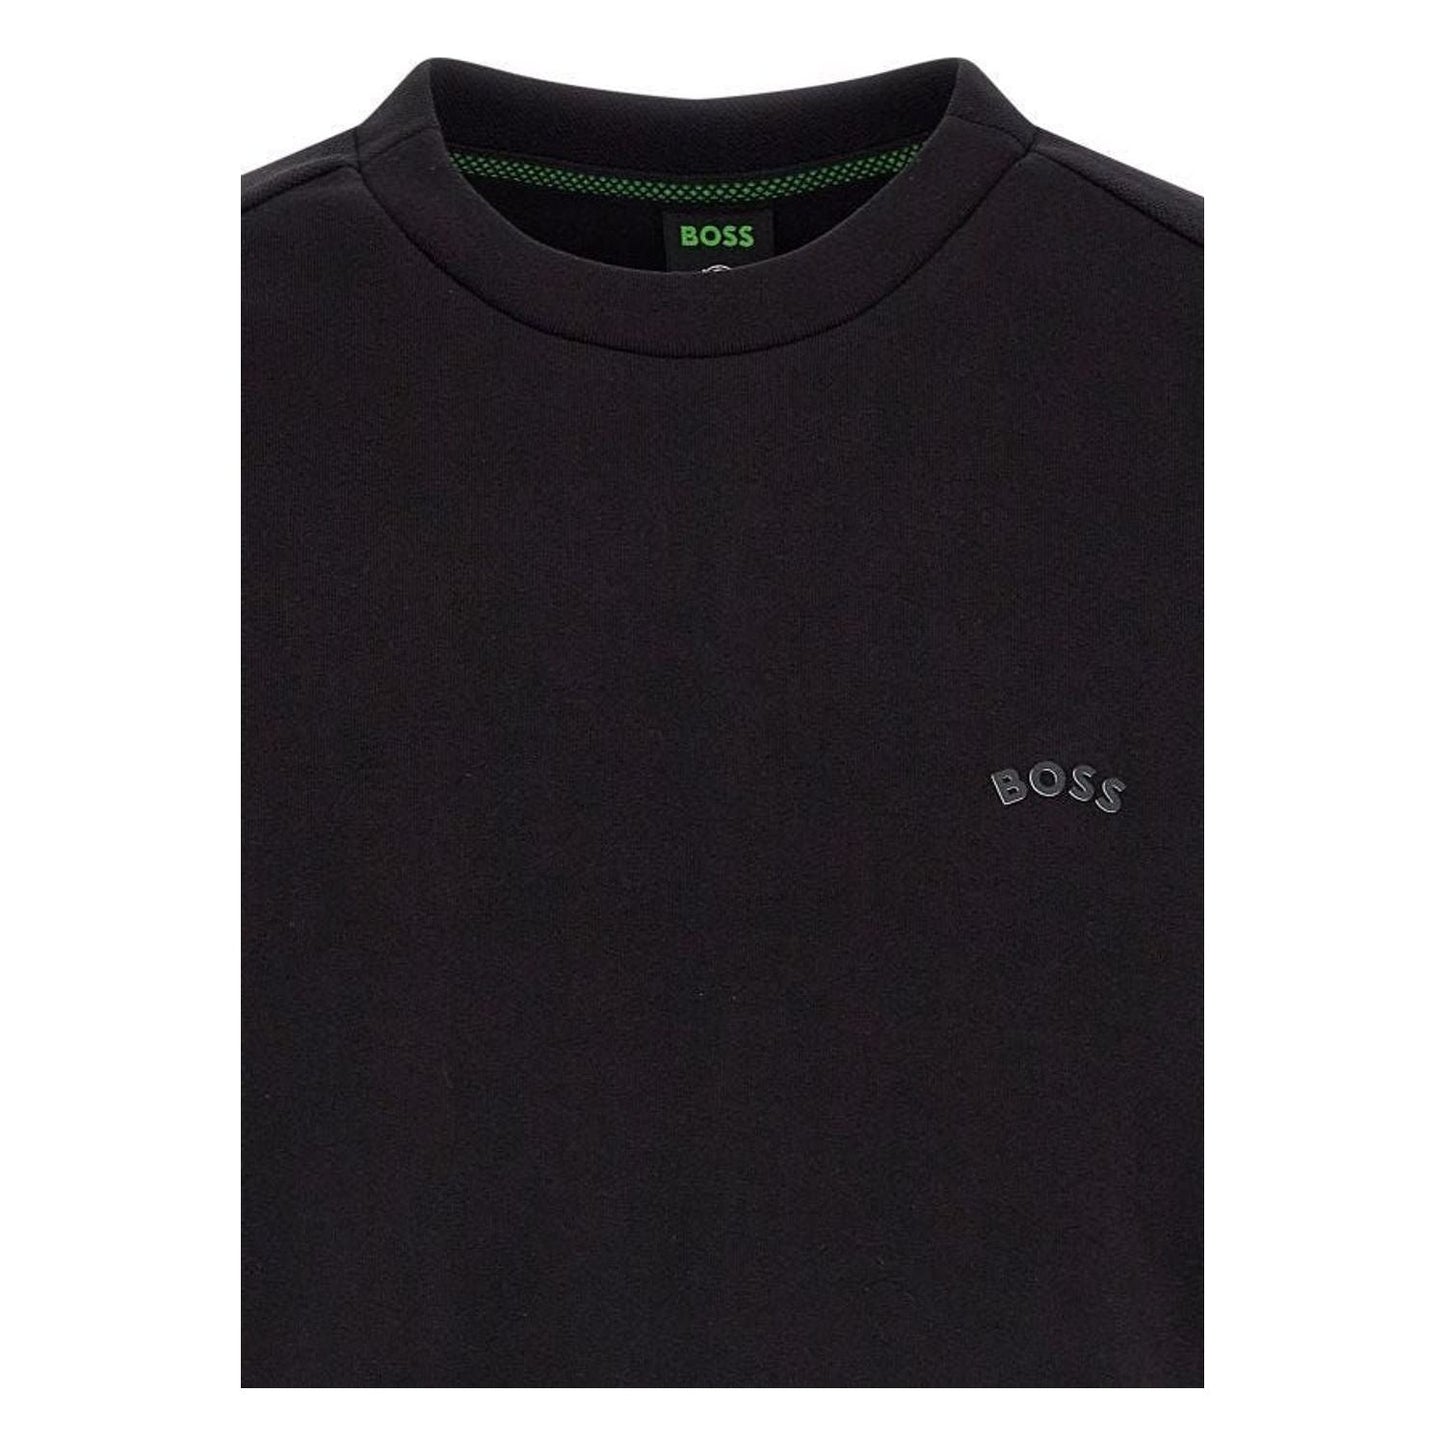 Hugo Boss Elegant Black Cotton Round Neck Sweatshirt black-cotton-logo-details-sweatshirt 50474192-001-2-537b48c3-d6b.jpg